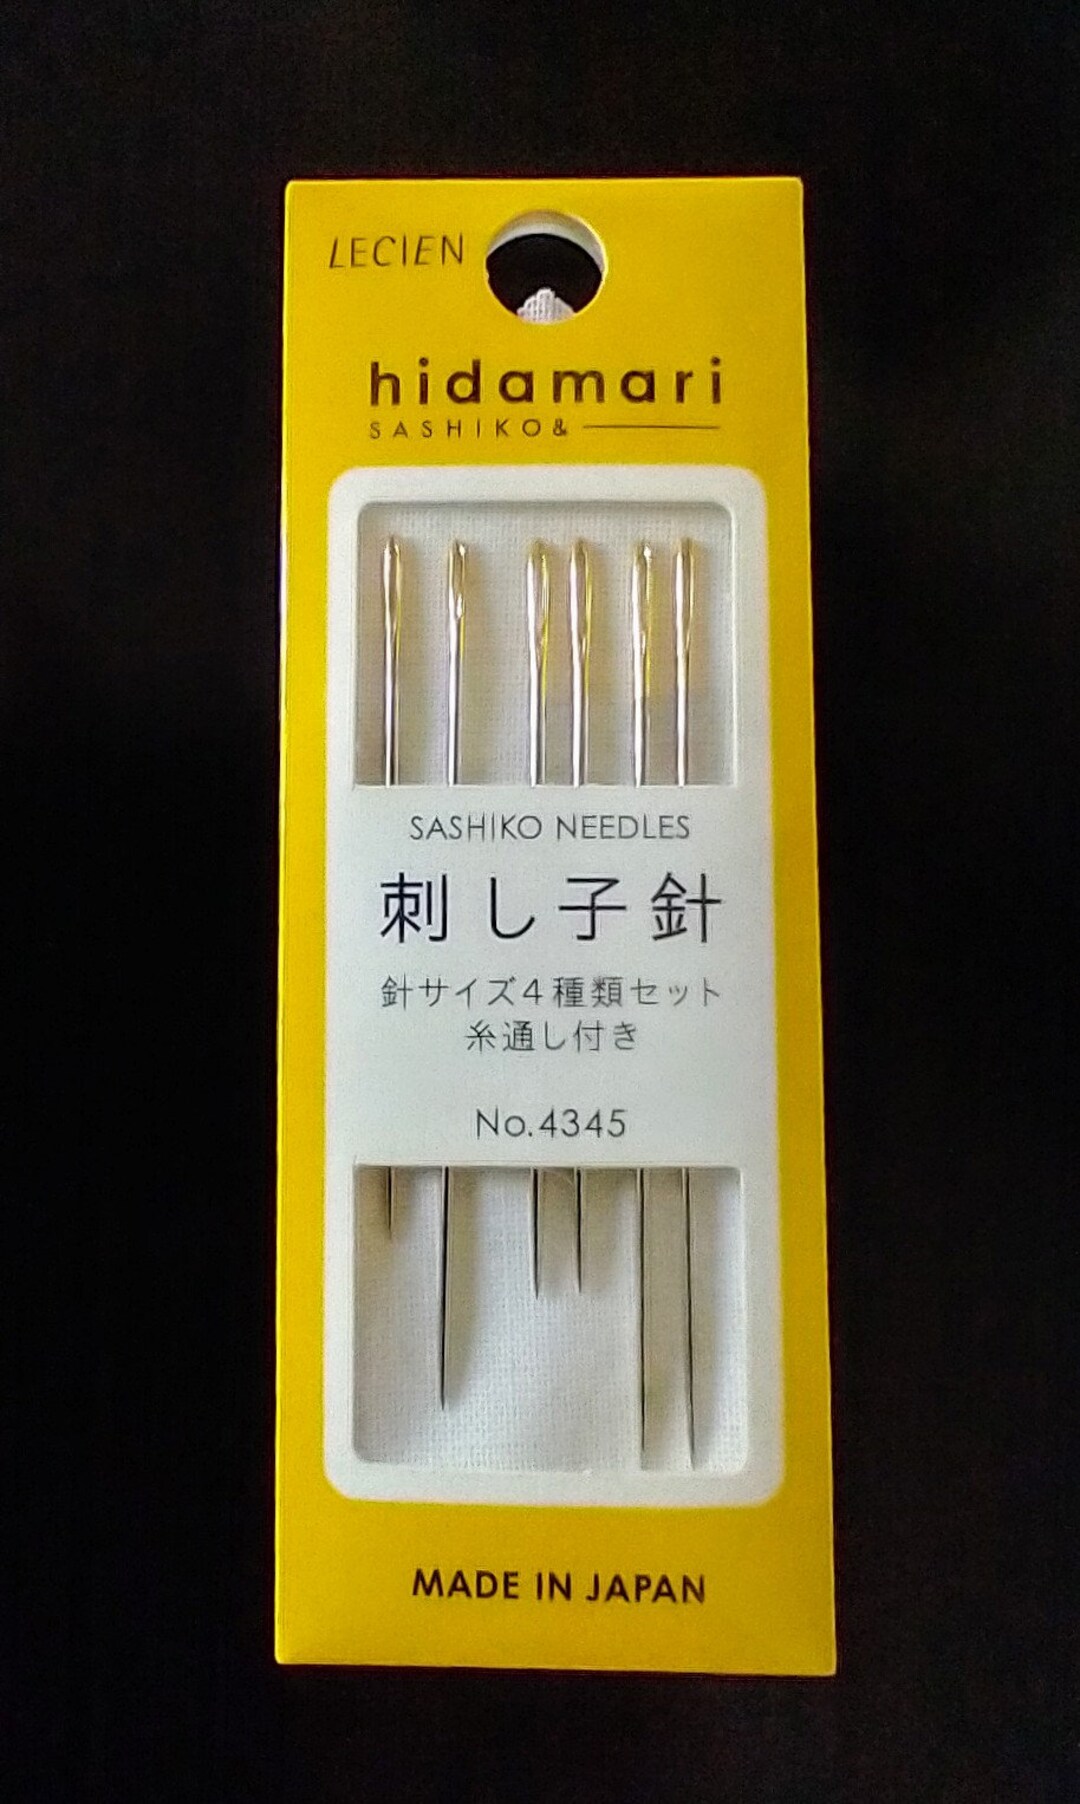 Notions - Hidamari Sashiko Needles & Threader - 6 needles - 4 sizes